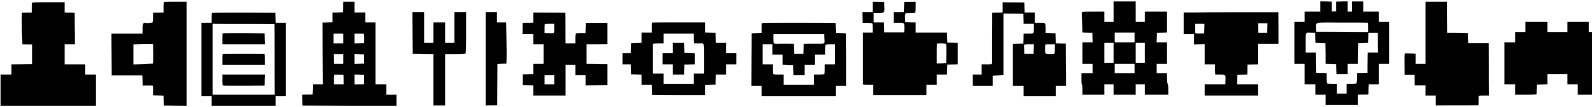 Big Pixel Icon Black